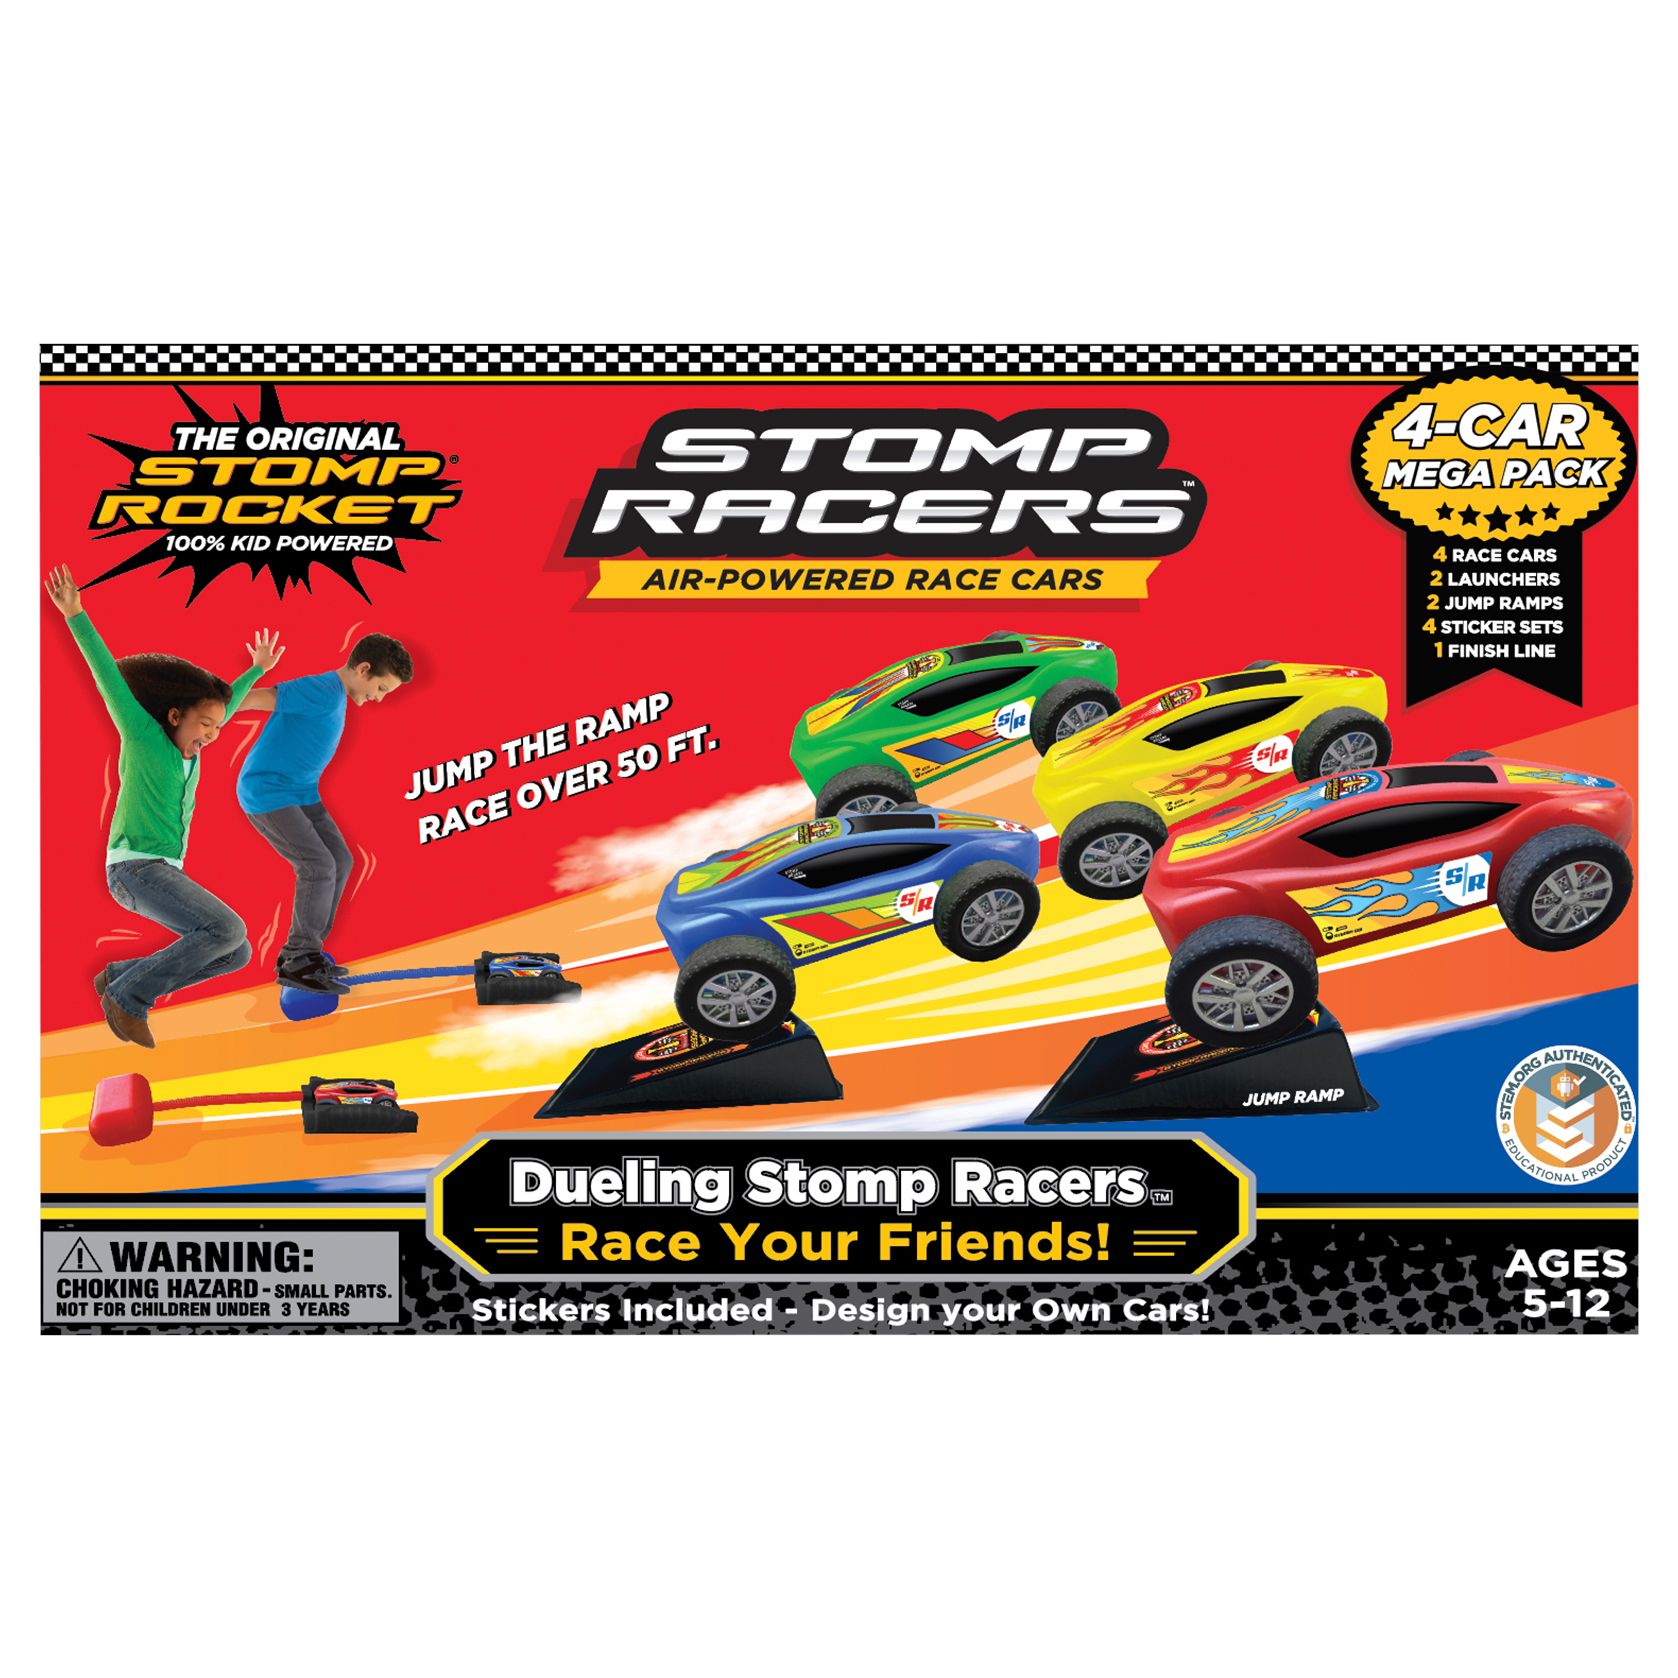 Magic Tracks - Rocket Racers